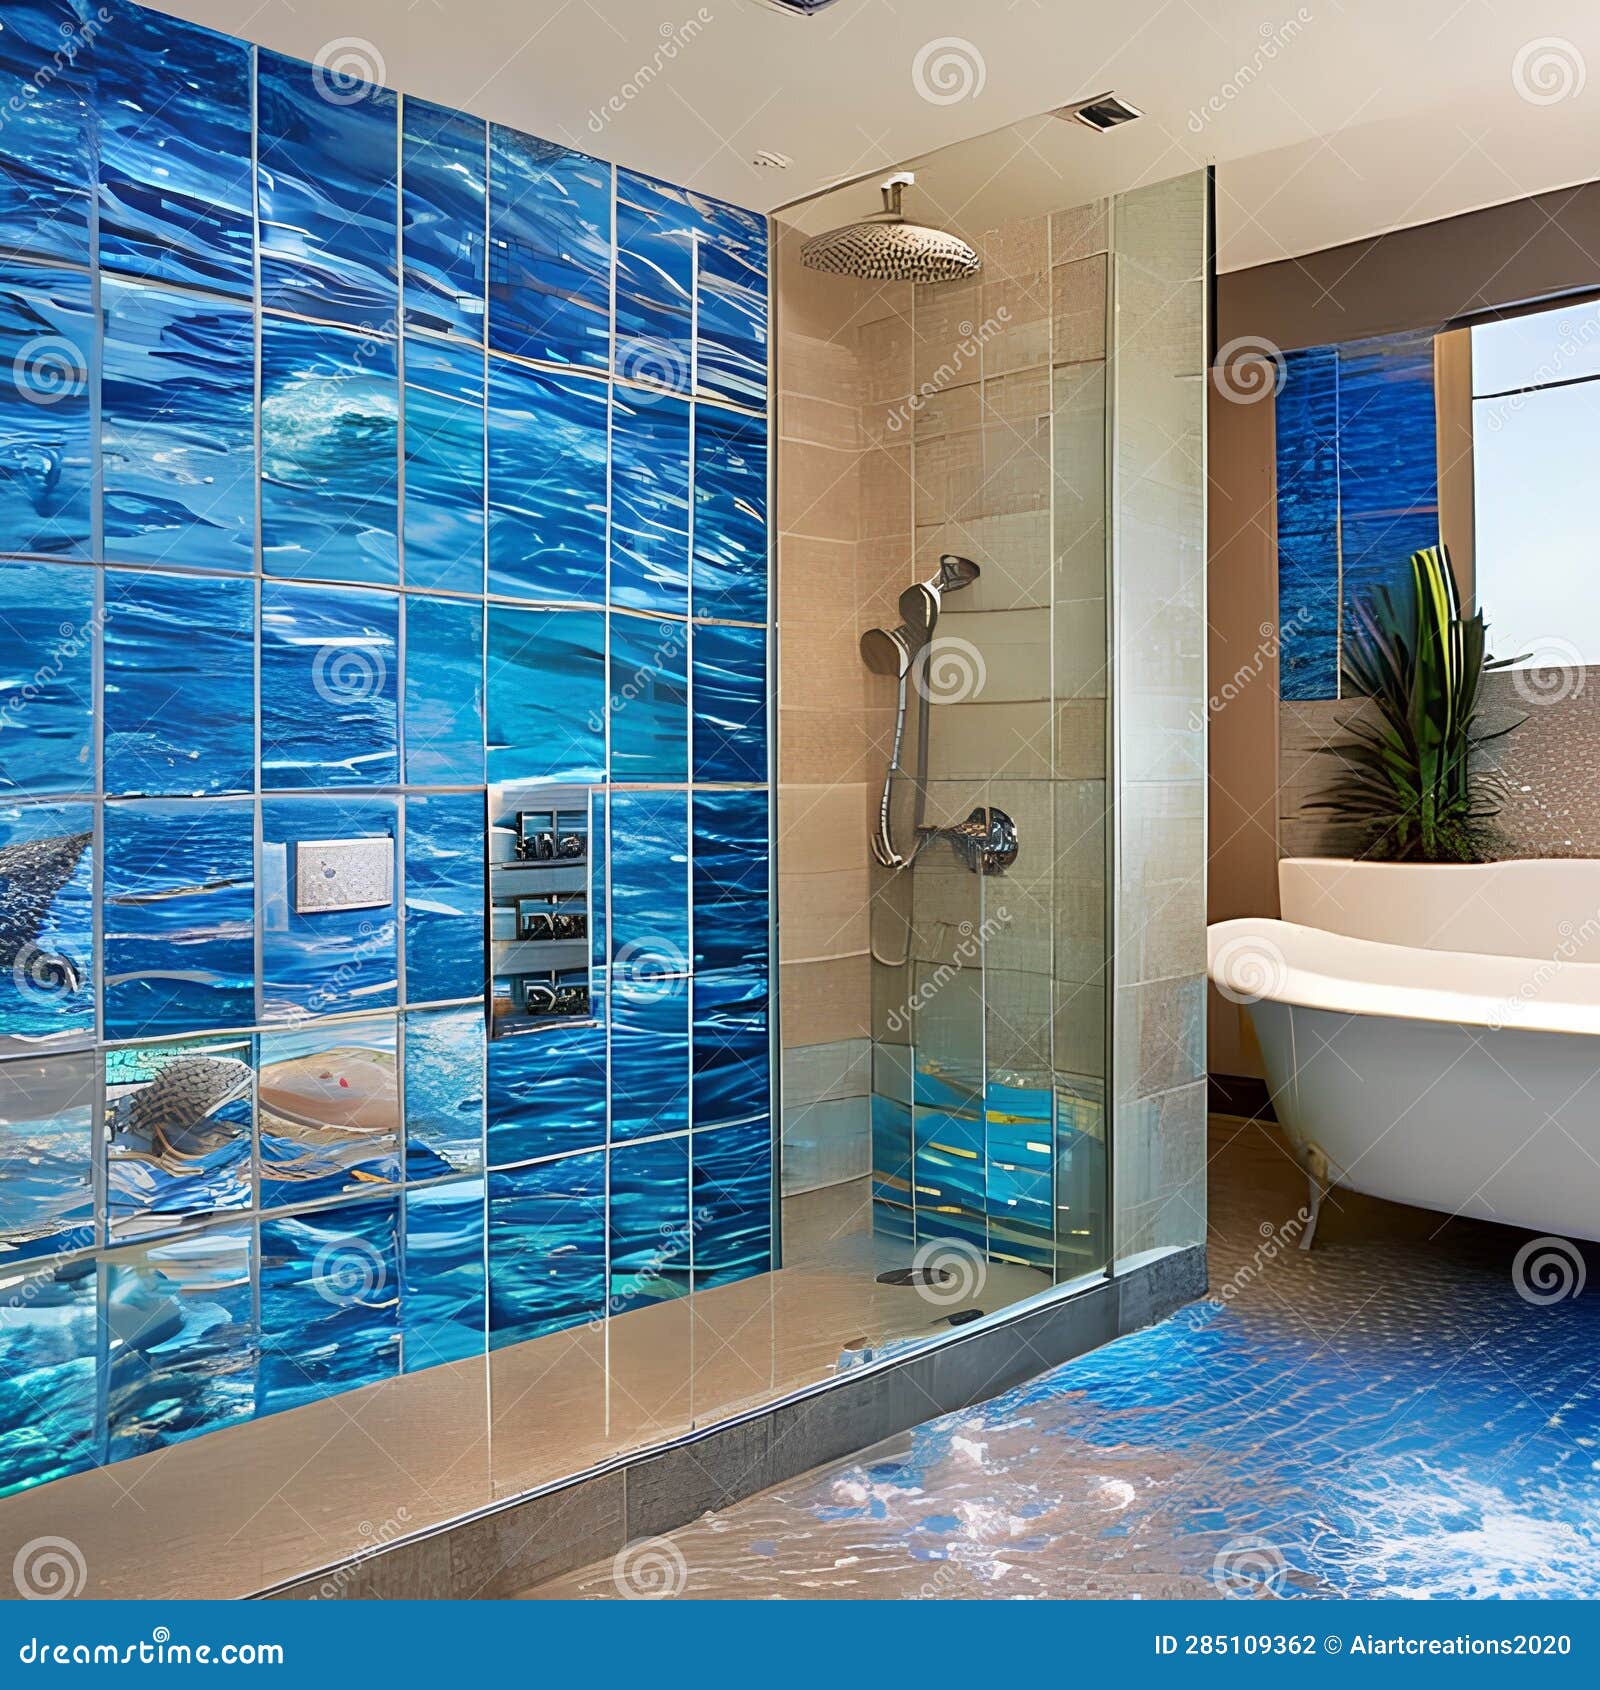 4 Underwater Wonder: an Aquatic-themed Bathroom with Iridescent